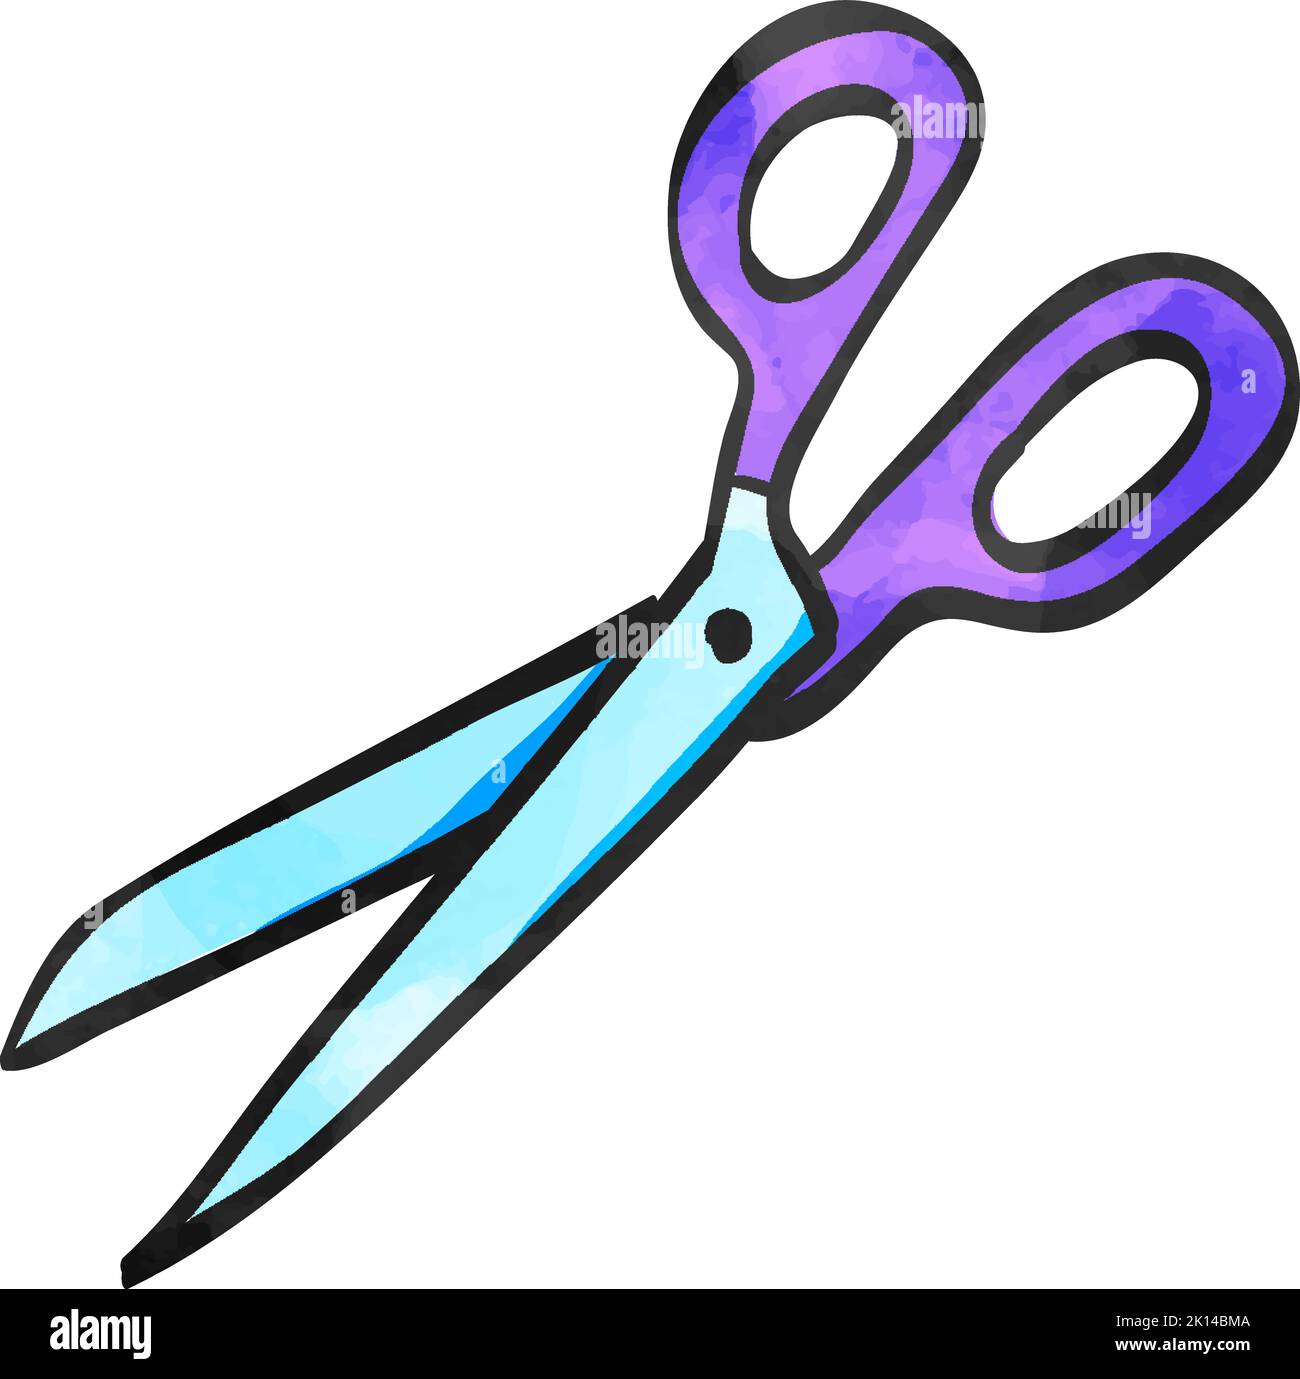 Scissors cartoon icon. Hand craft cutting tool